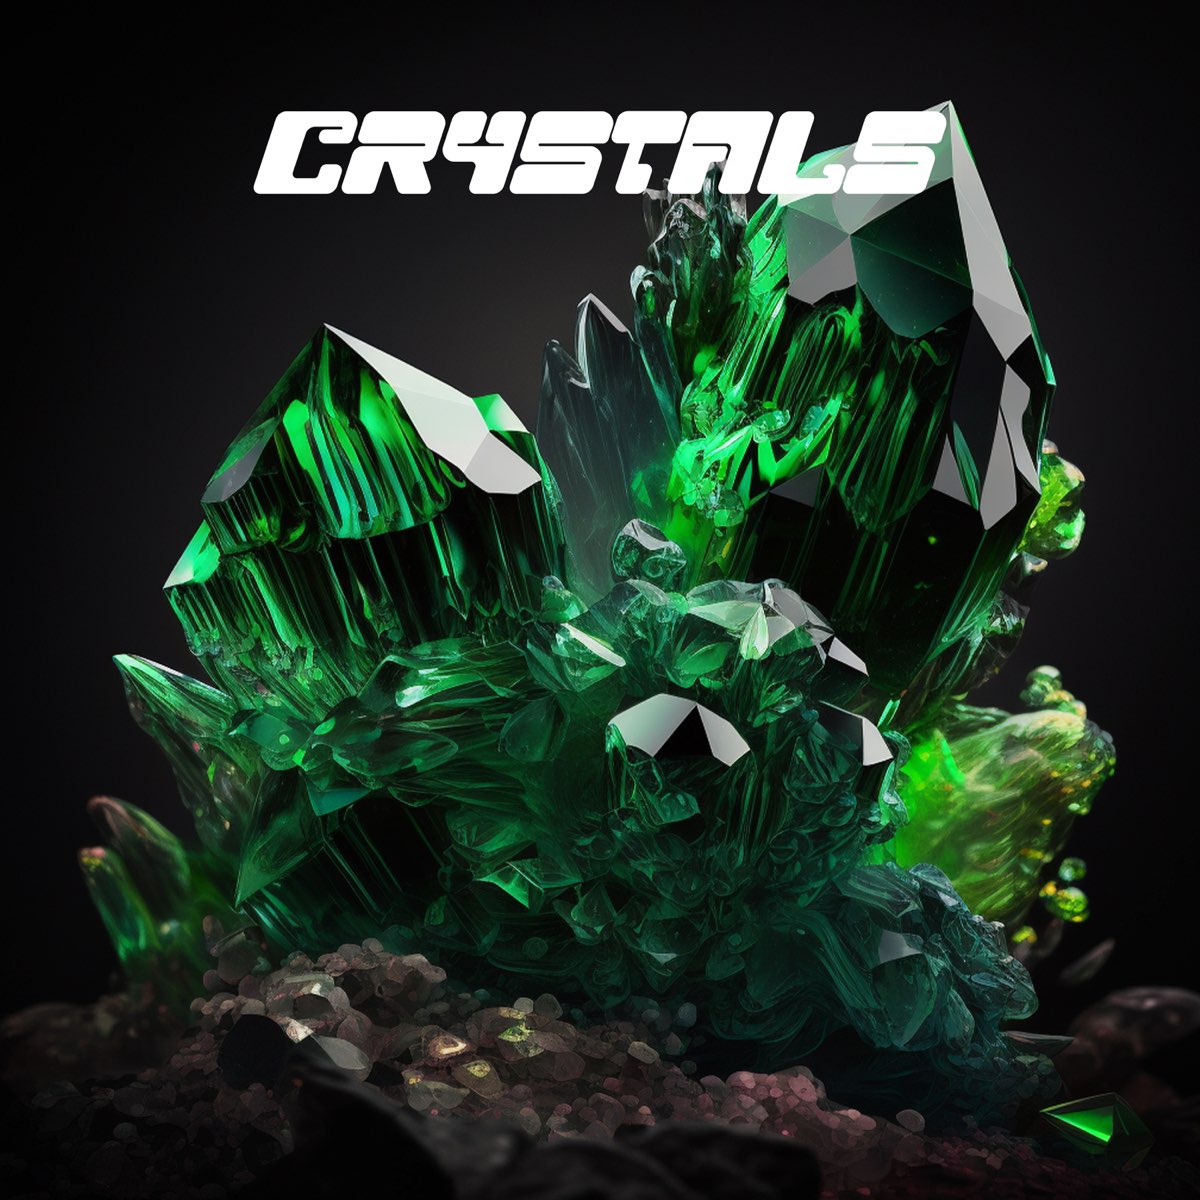 Crystals lsolate. Crystals (Slowed) от pr1svx. Pr1svx Crystals обложка. Песня Crystals Slowed pr1svx. Isolate.exe - Crystals (Slowed € Reverb).